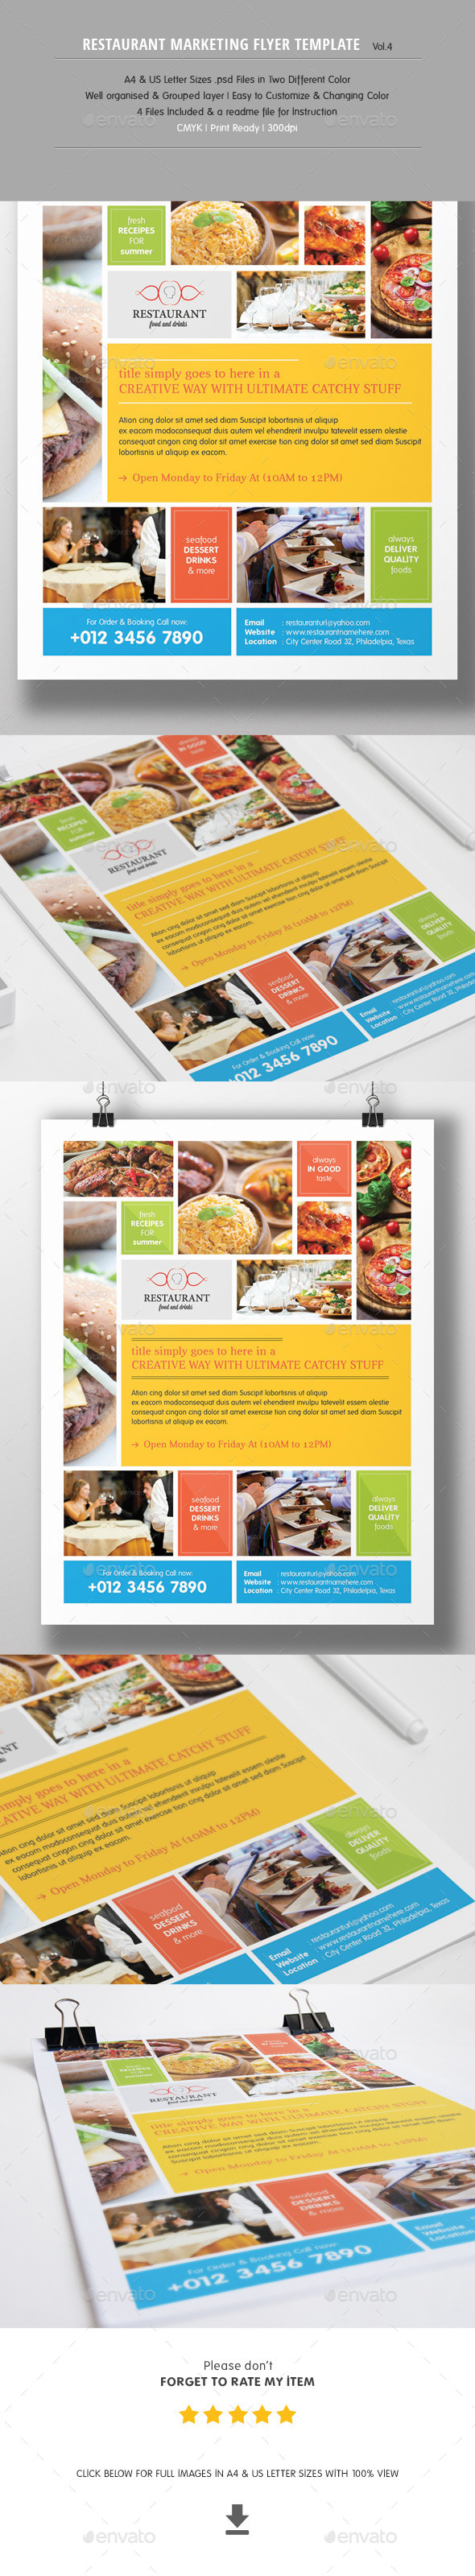 Restaurant Marketing Flyer Vol.3